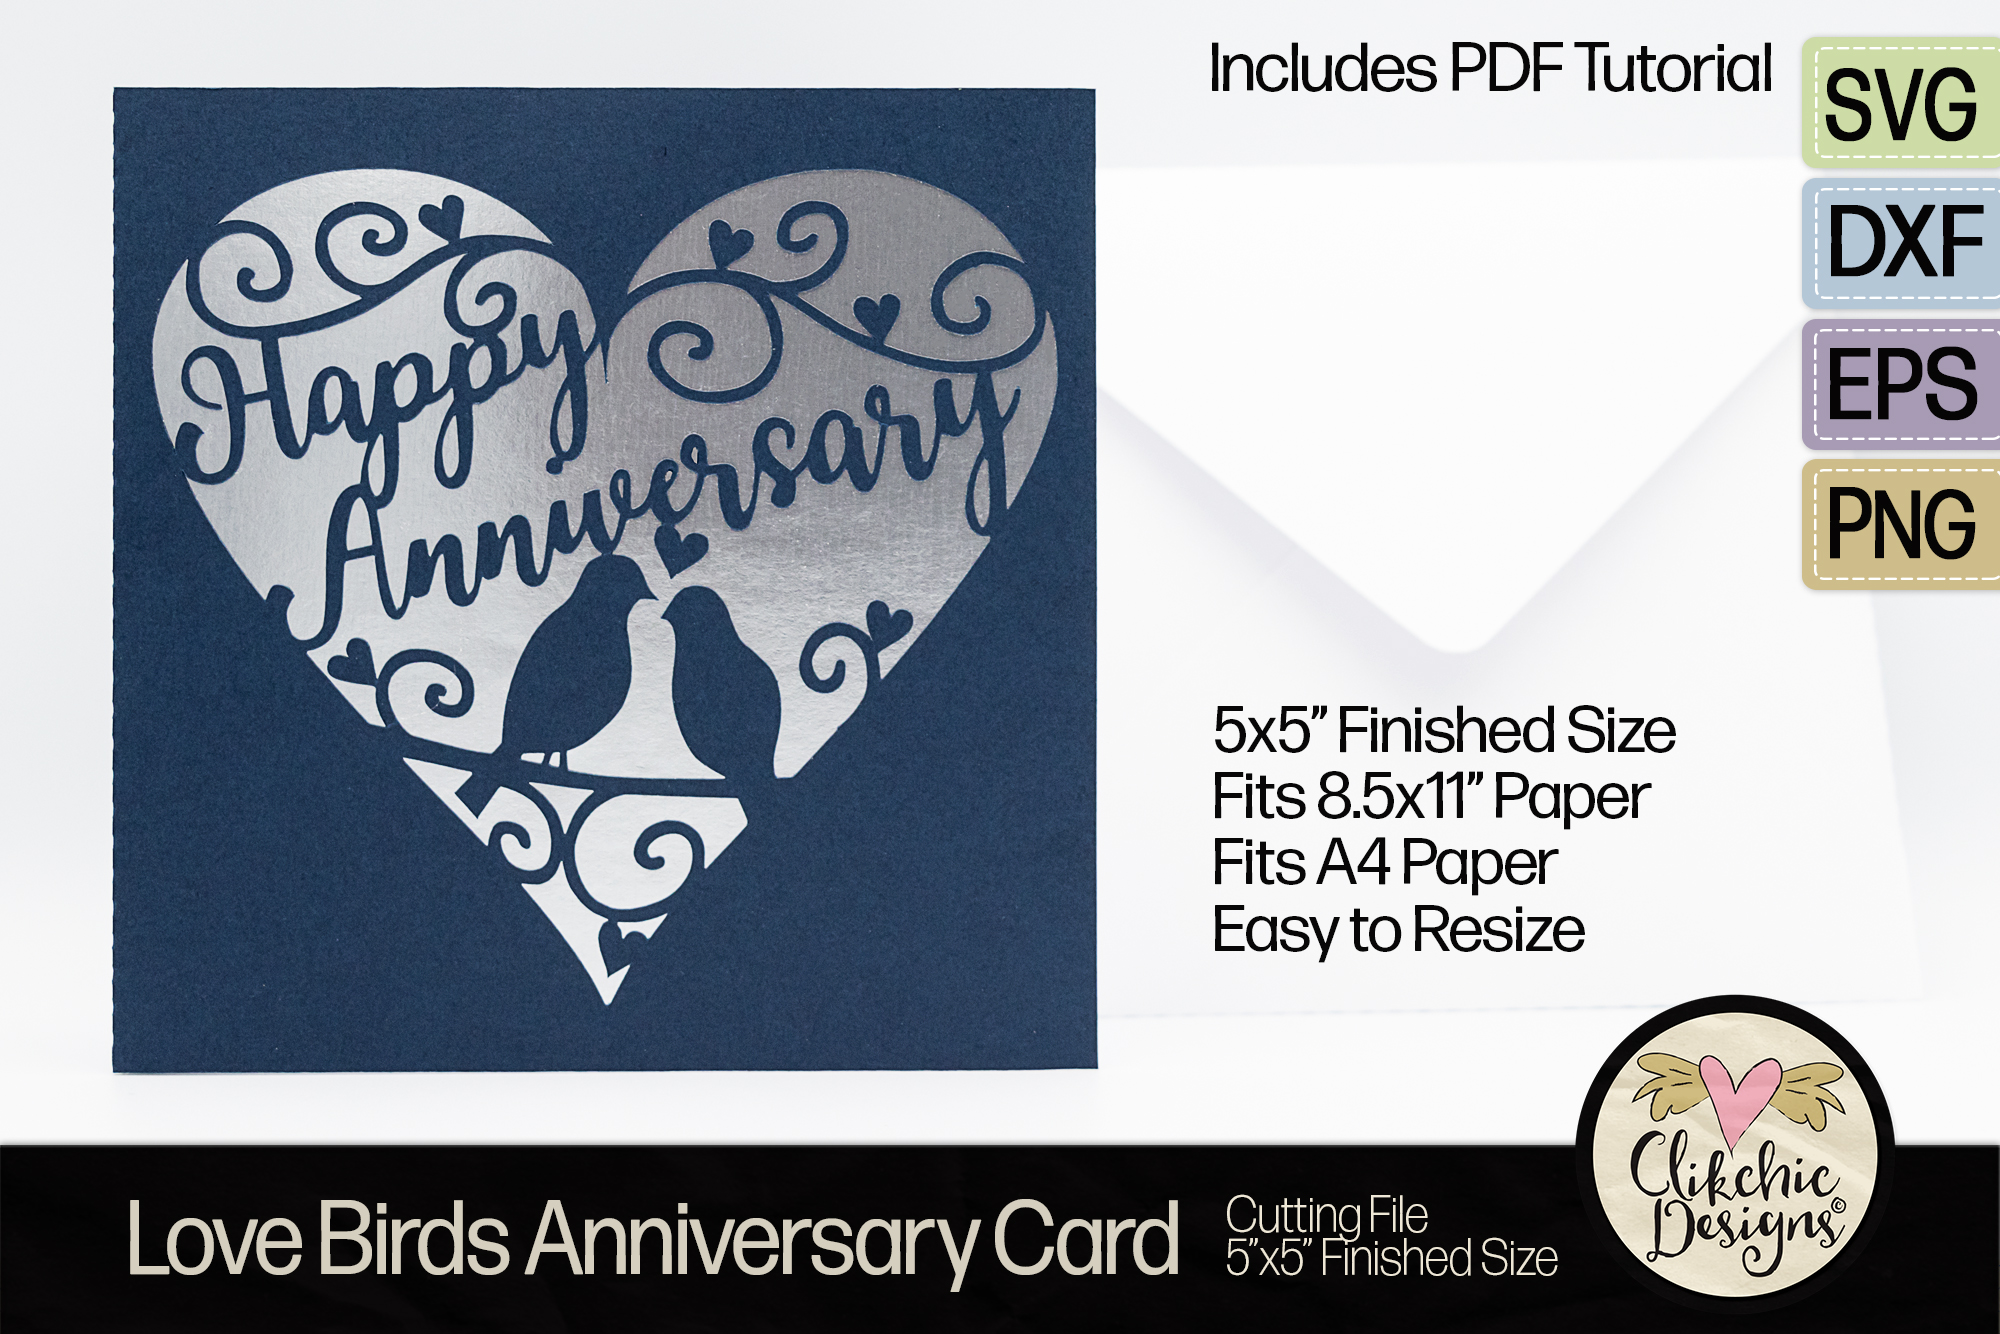 Love Birds Happy Anniversary Card SVG Cutting File